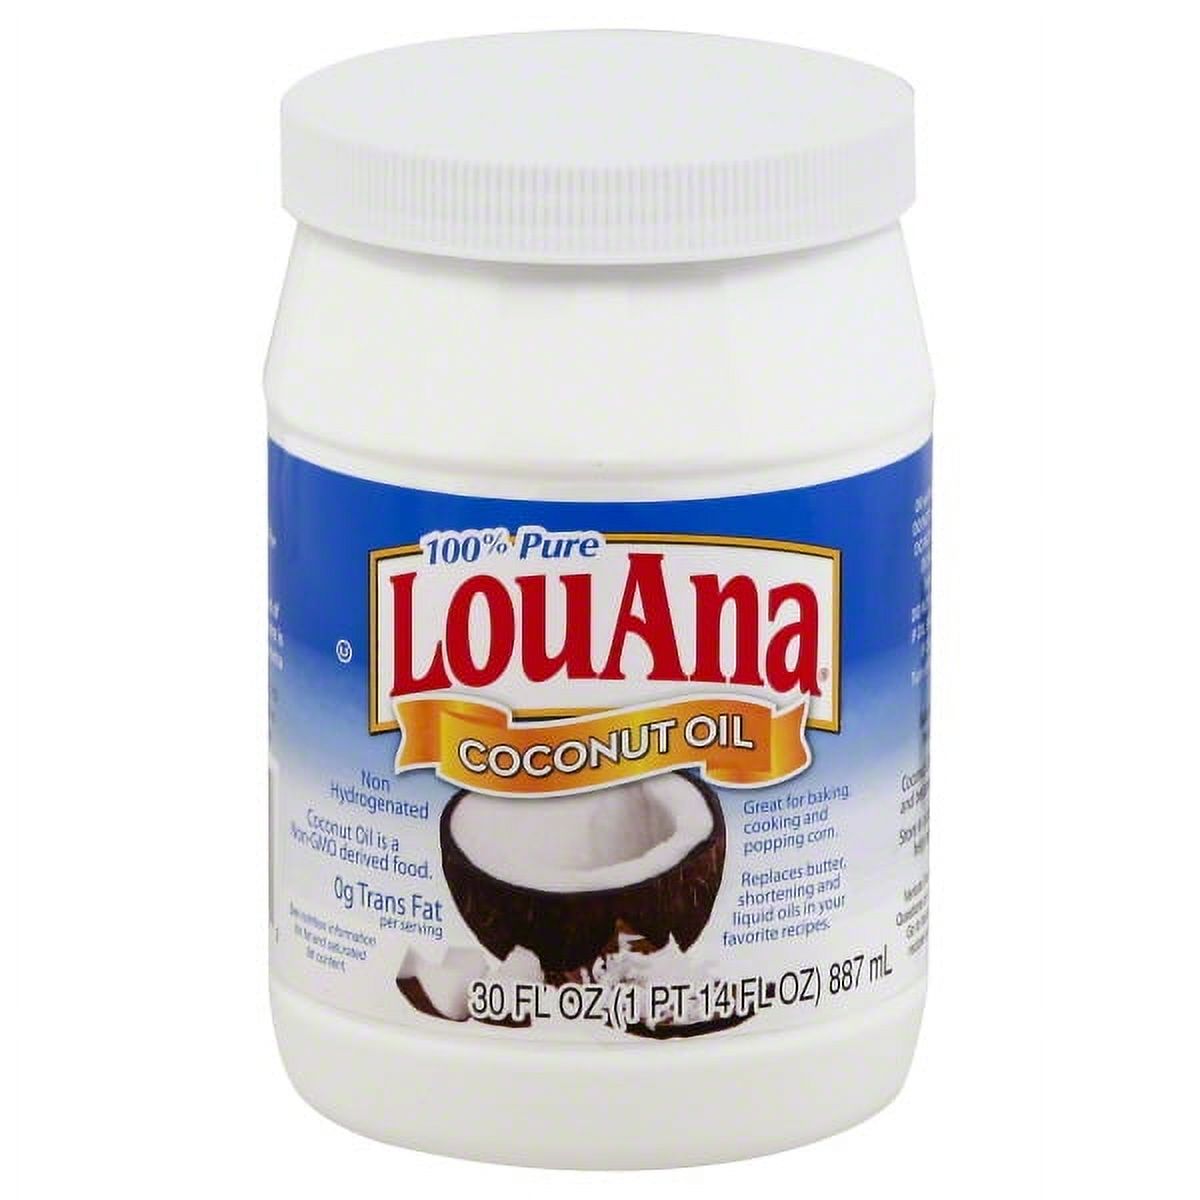 LouAna Coconut Oil 100% Pure, 30 Fl Oz - image 1 of 5